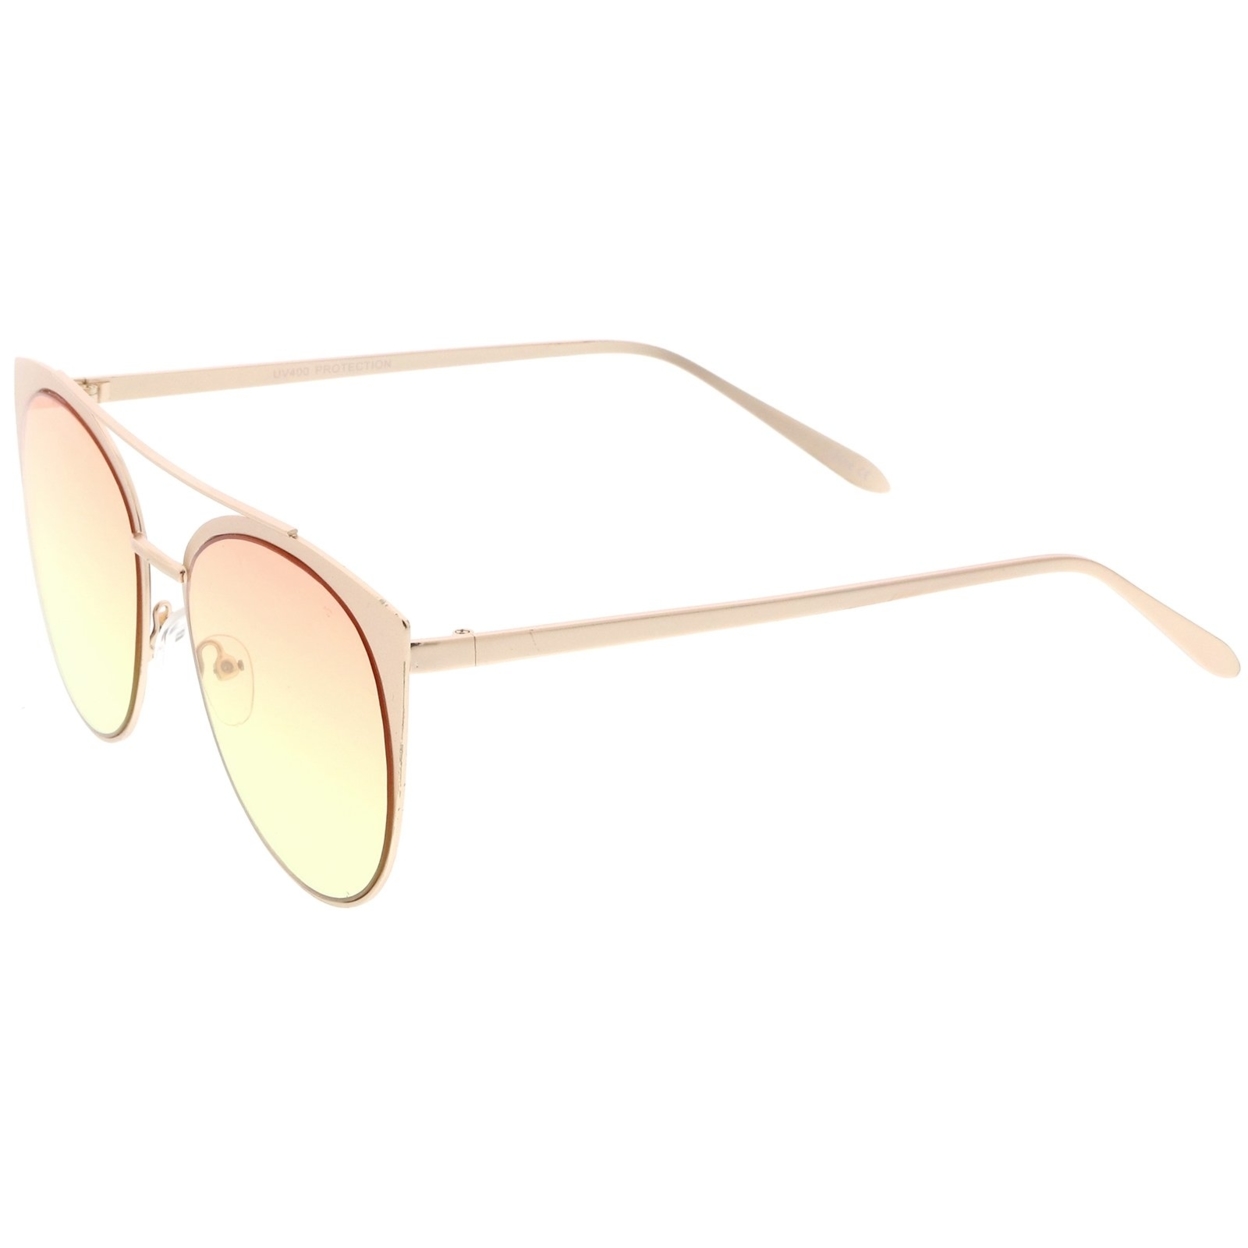 Women's Oversize Metal Crossbar Colored Flat Lens Cat Eye Sunglasses 61mm - Shiny Silver / Green-Yellow